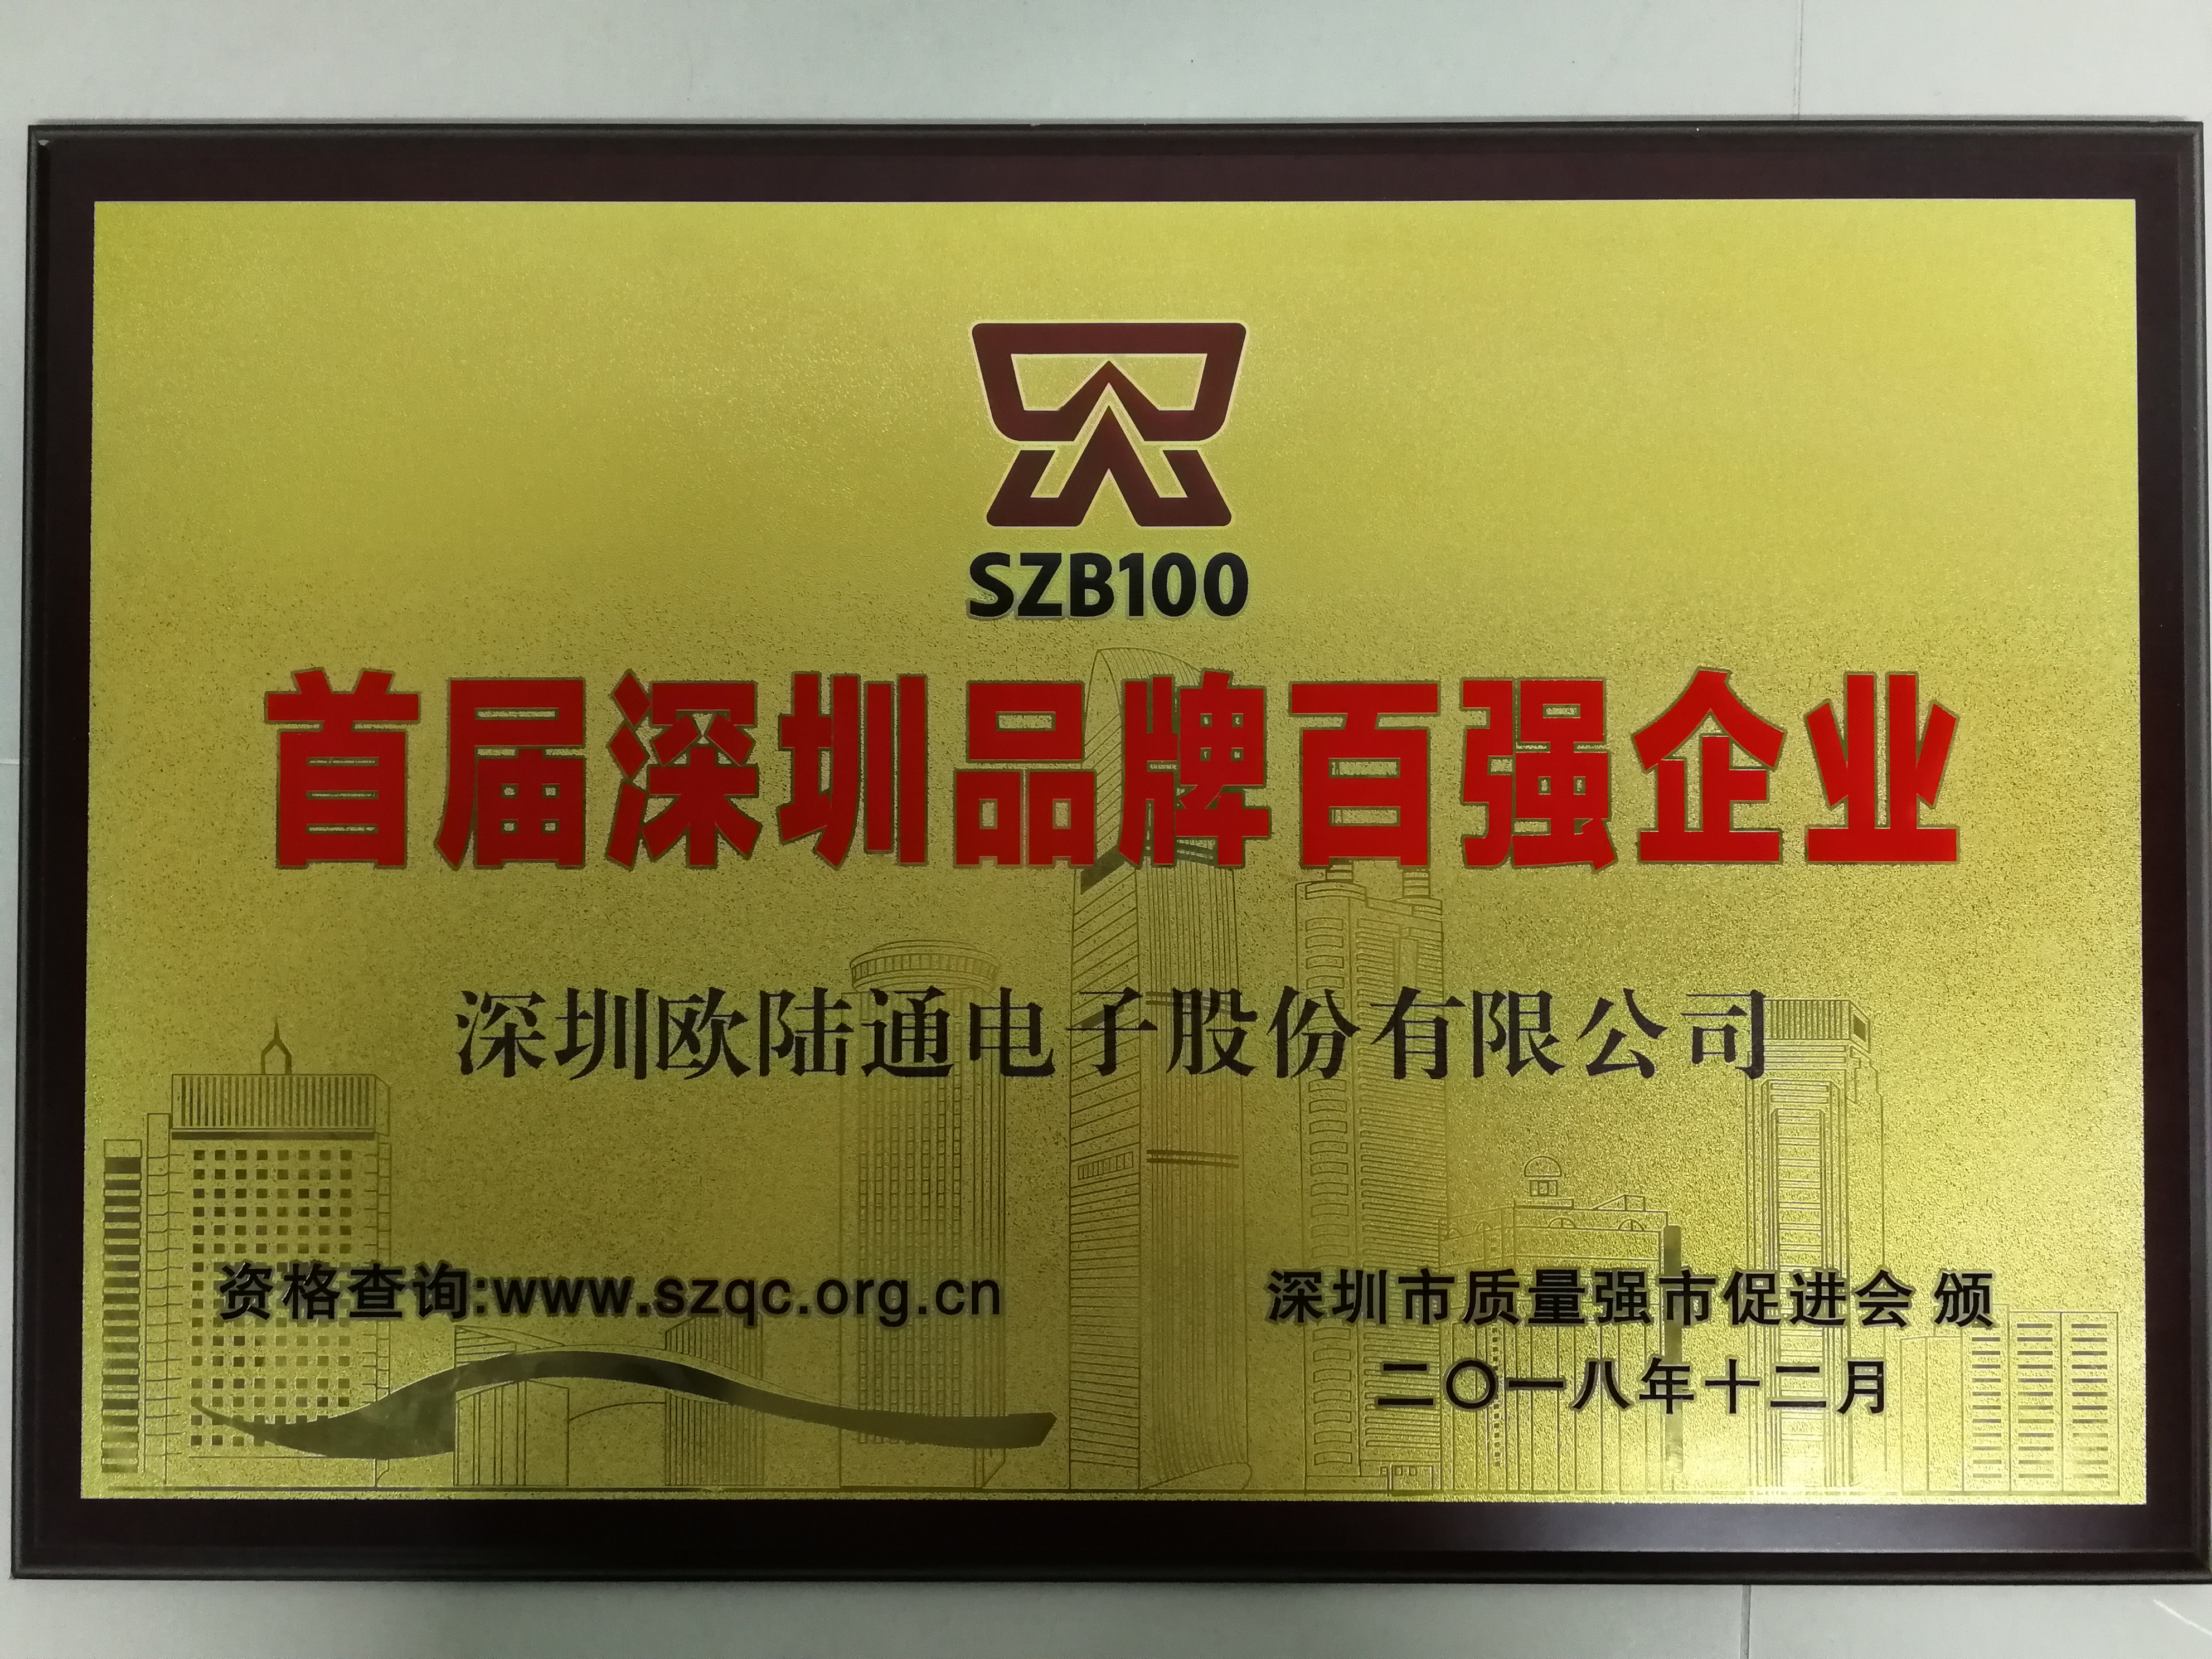 The first Shenzhen Top 100 Brand Enterprises